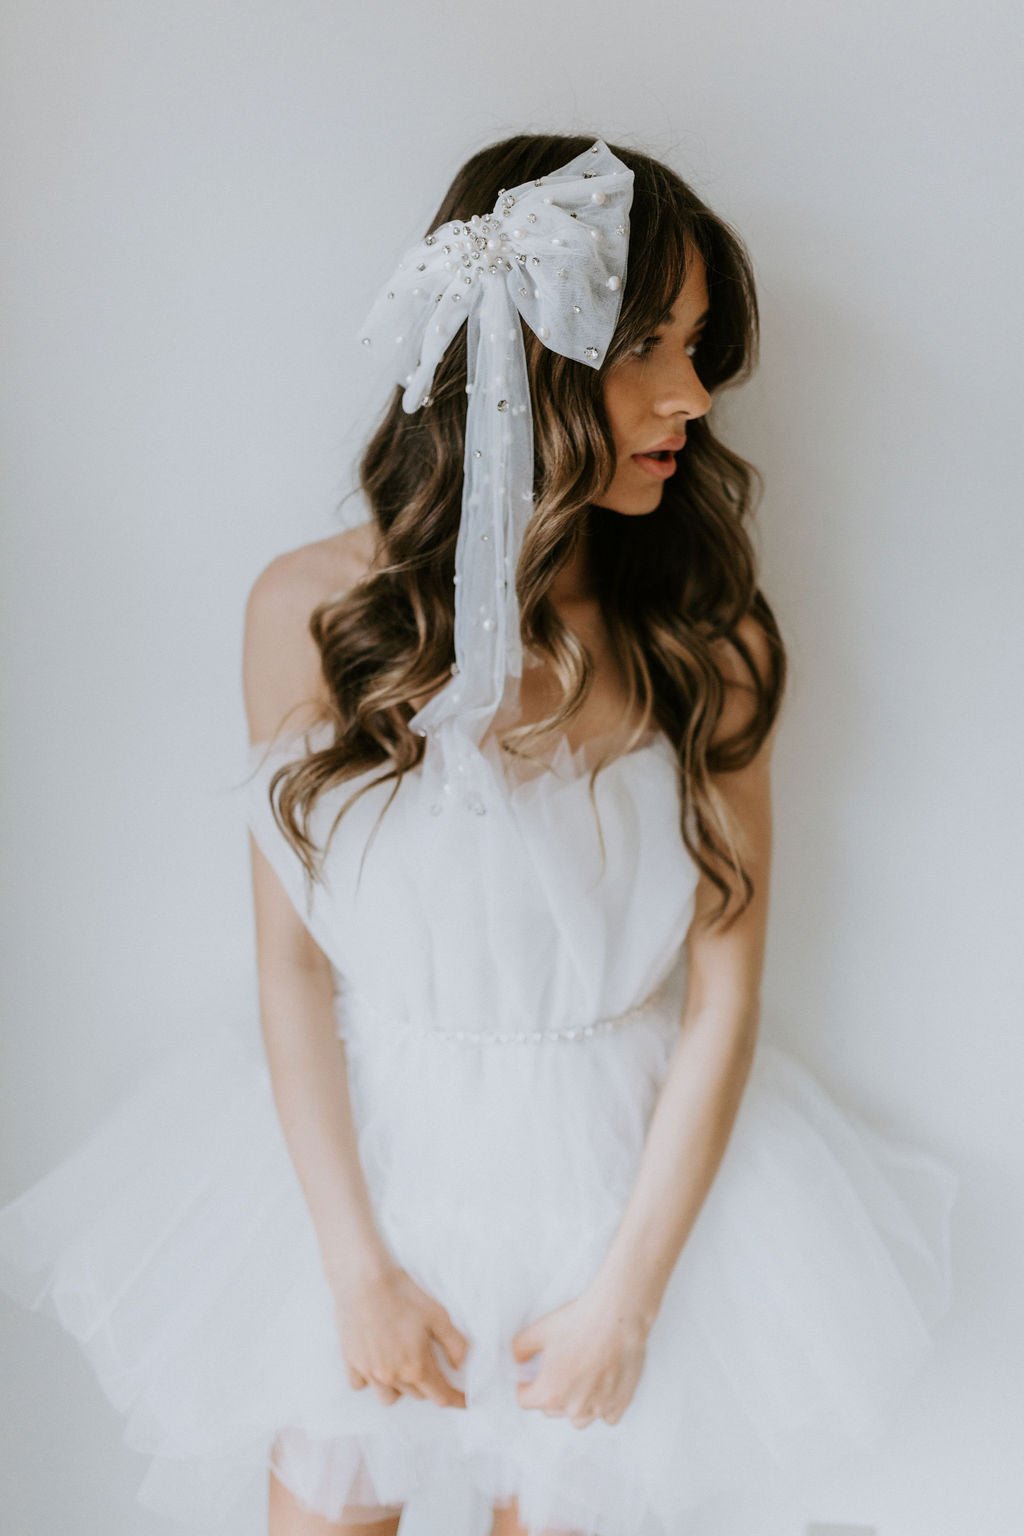 presley-bow-untamed-petals-bridal-accessories.jpg